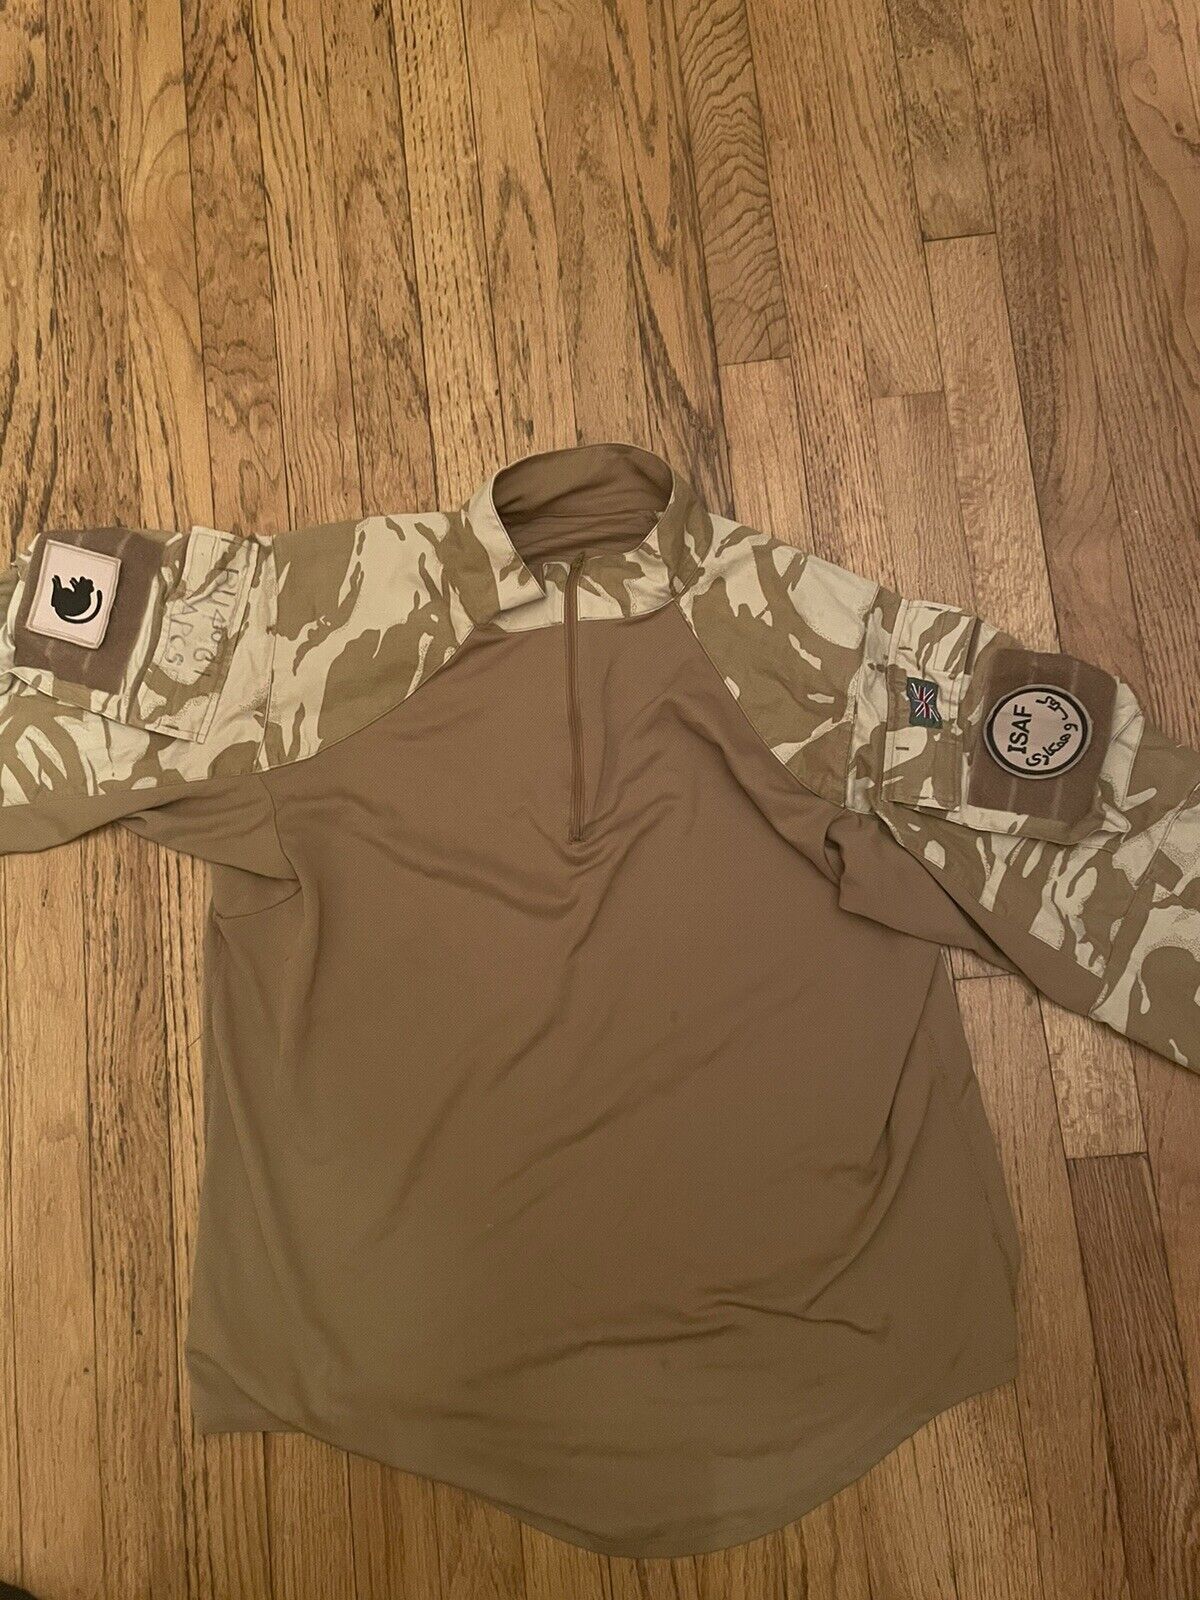 British Desert DPM Camo Combat Shirt With Original Patches